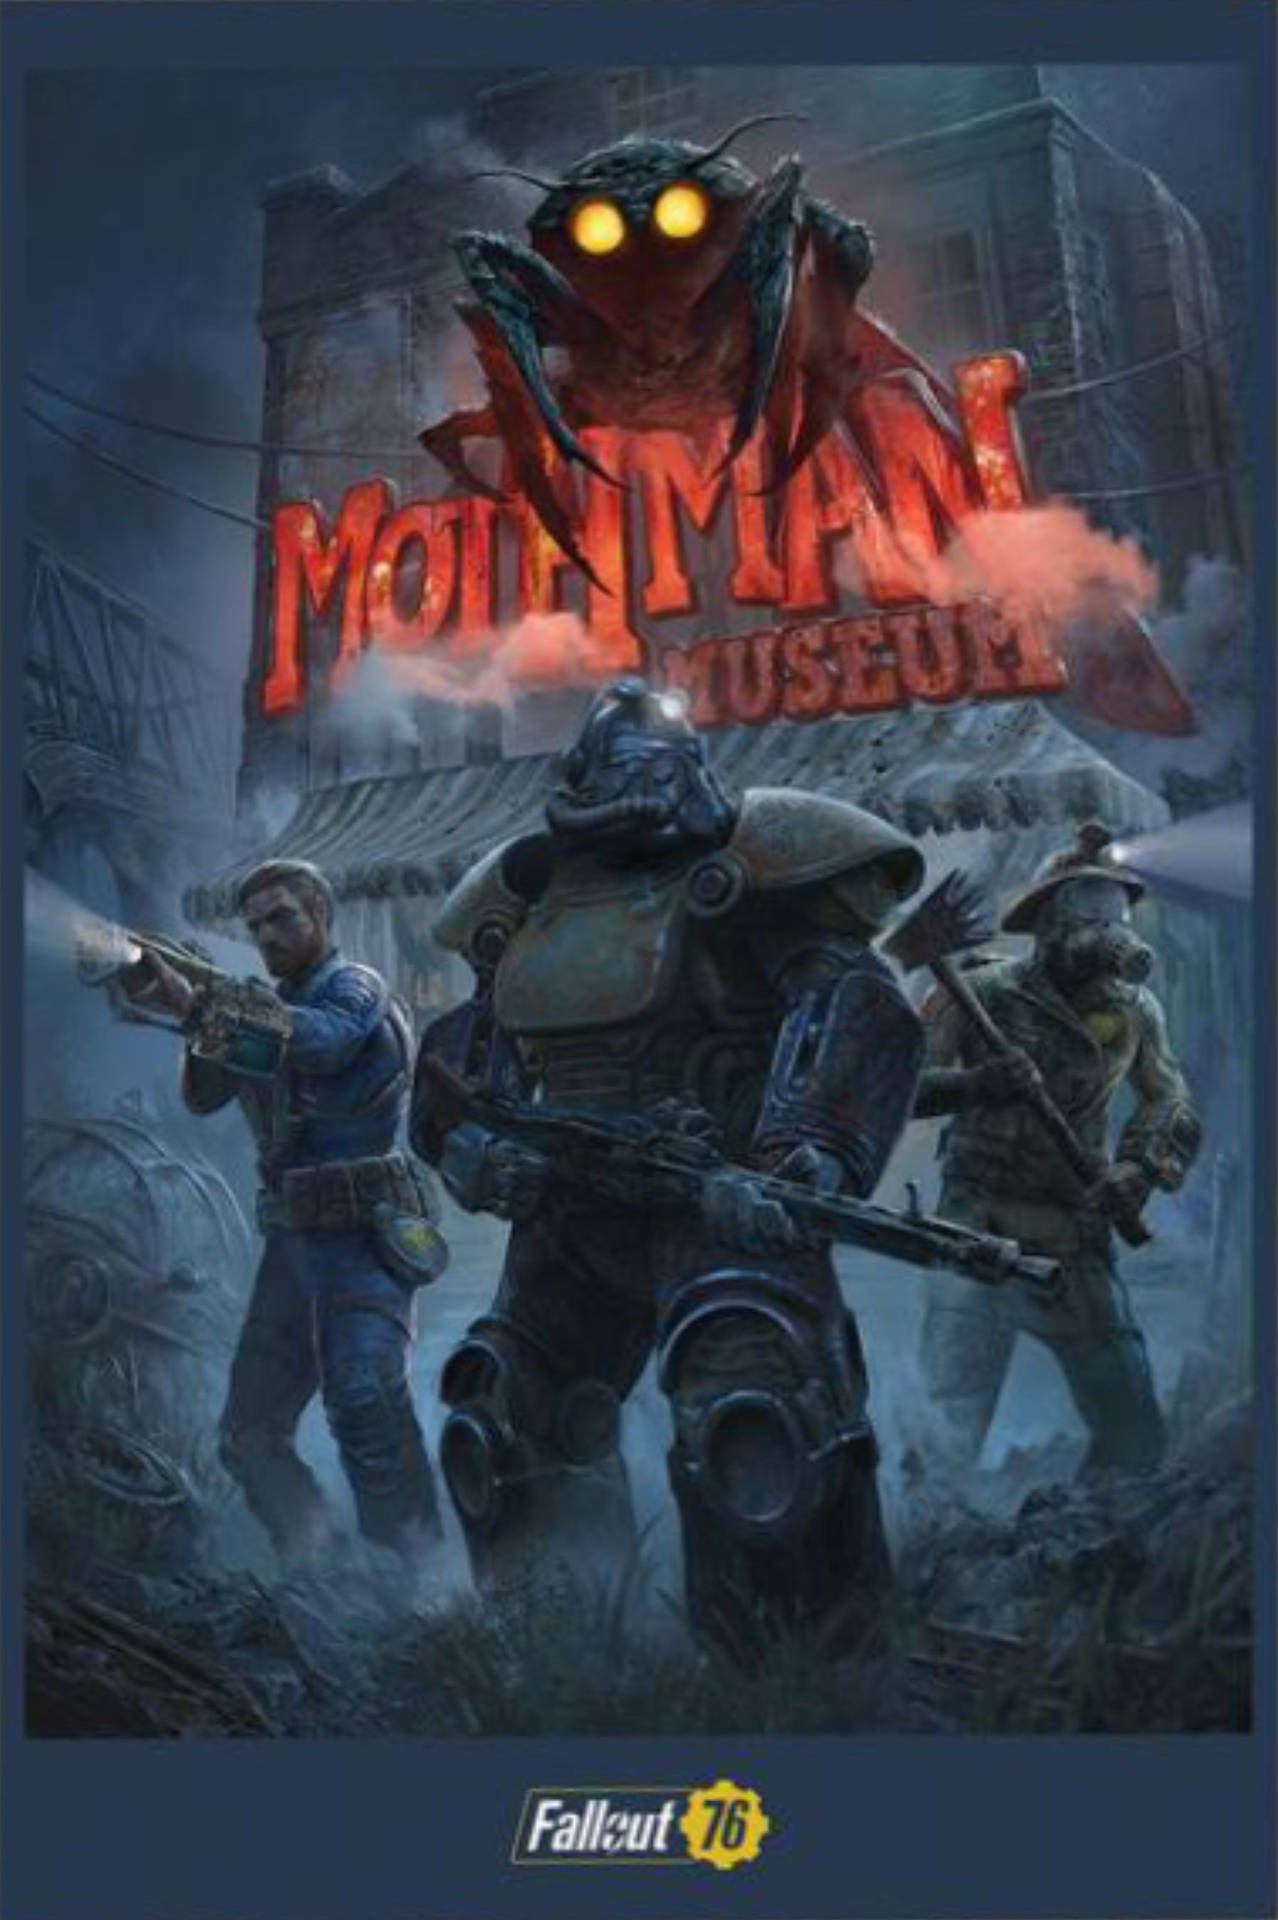 Visit the Mothman Museum in Fallout 76 Wallpaper